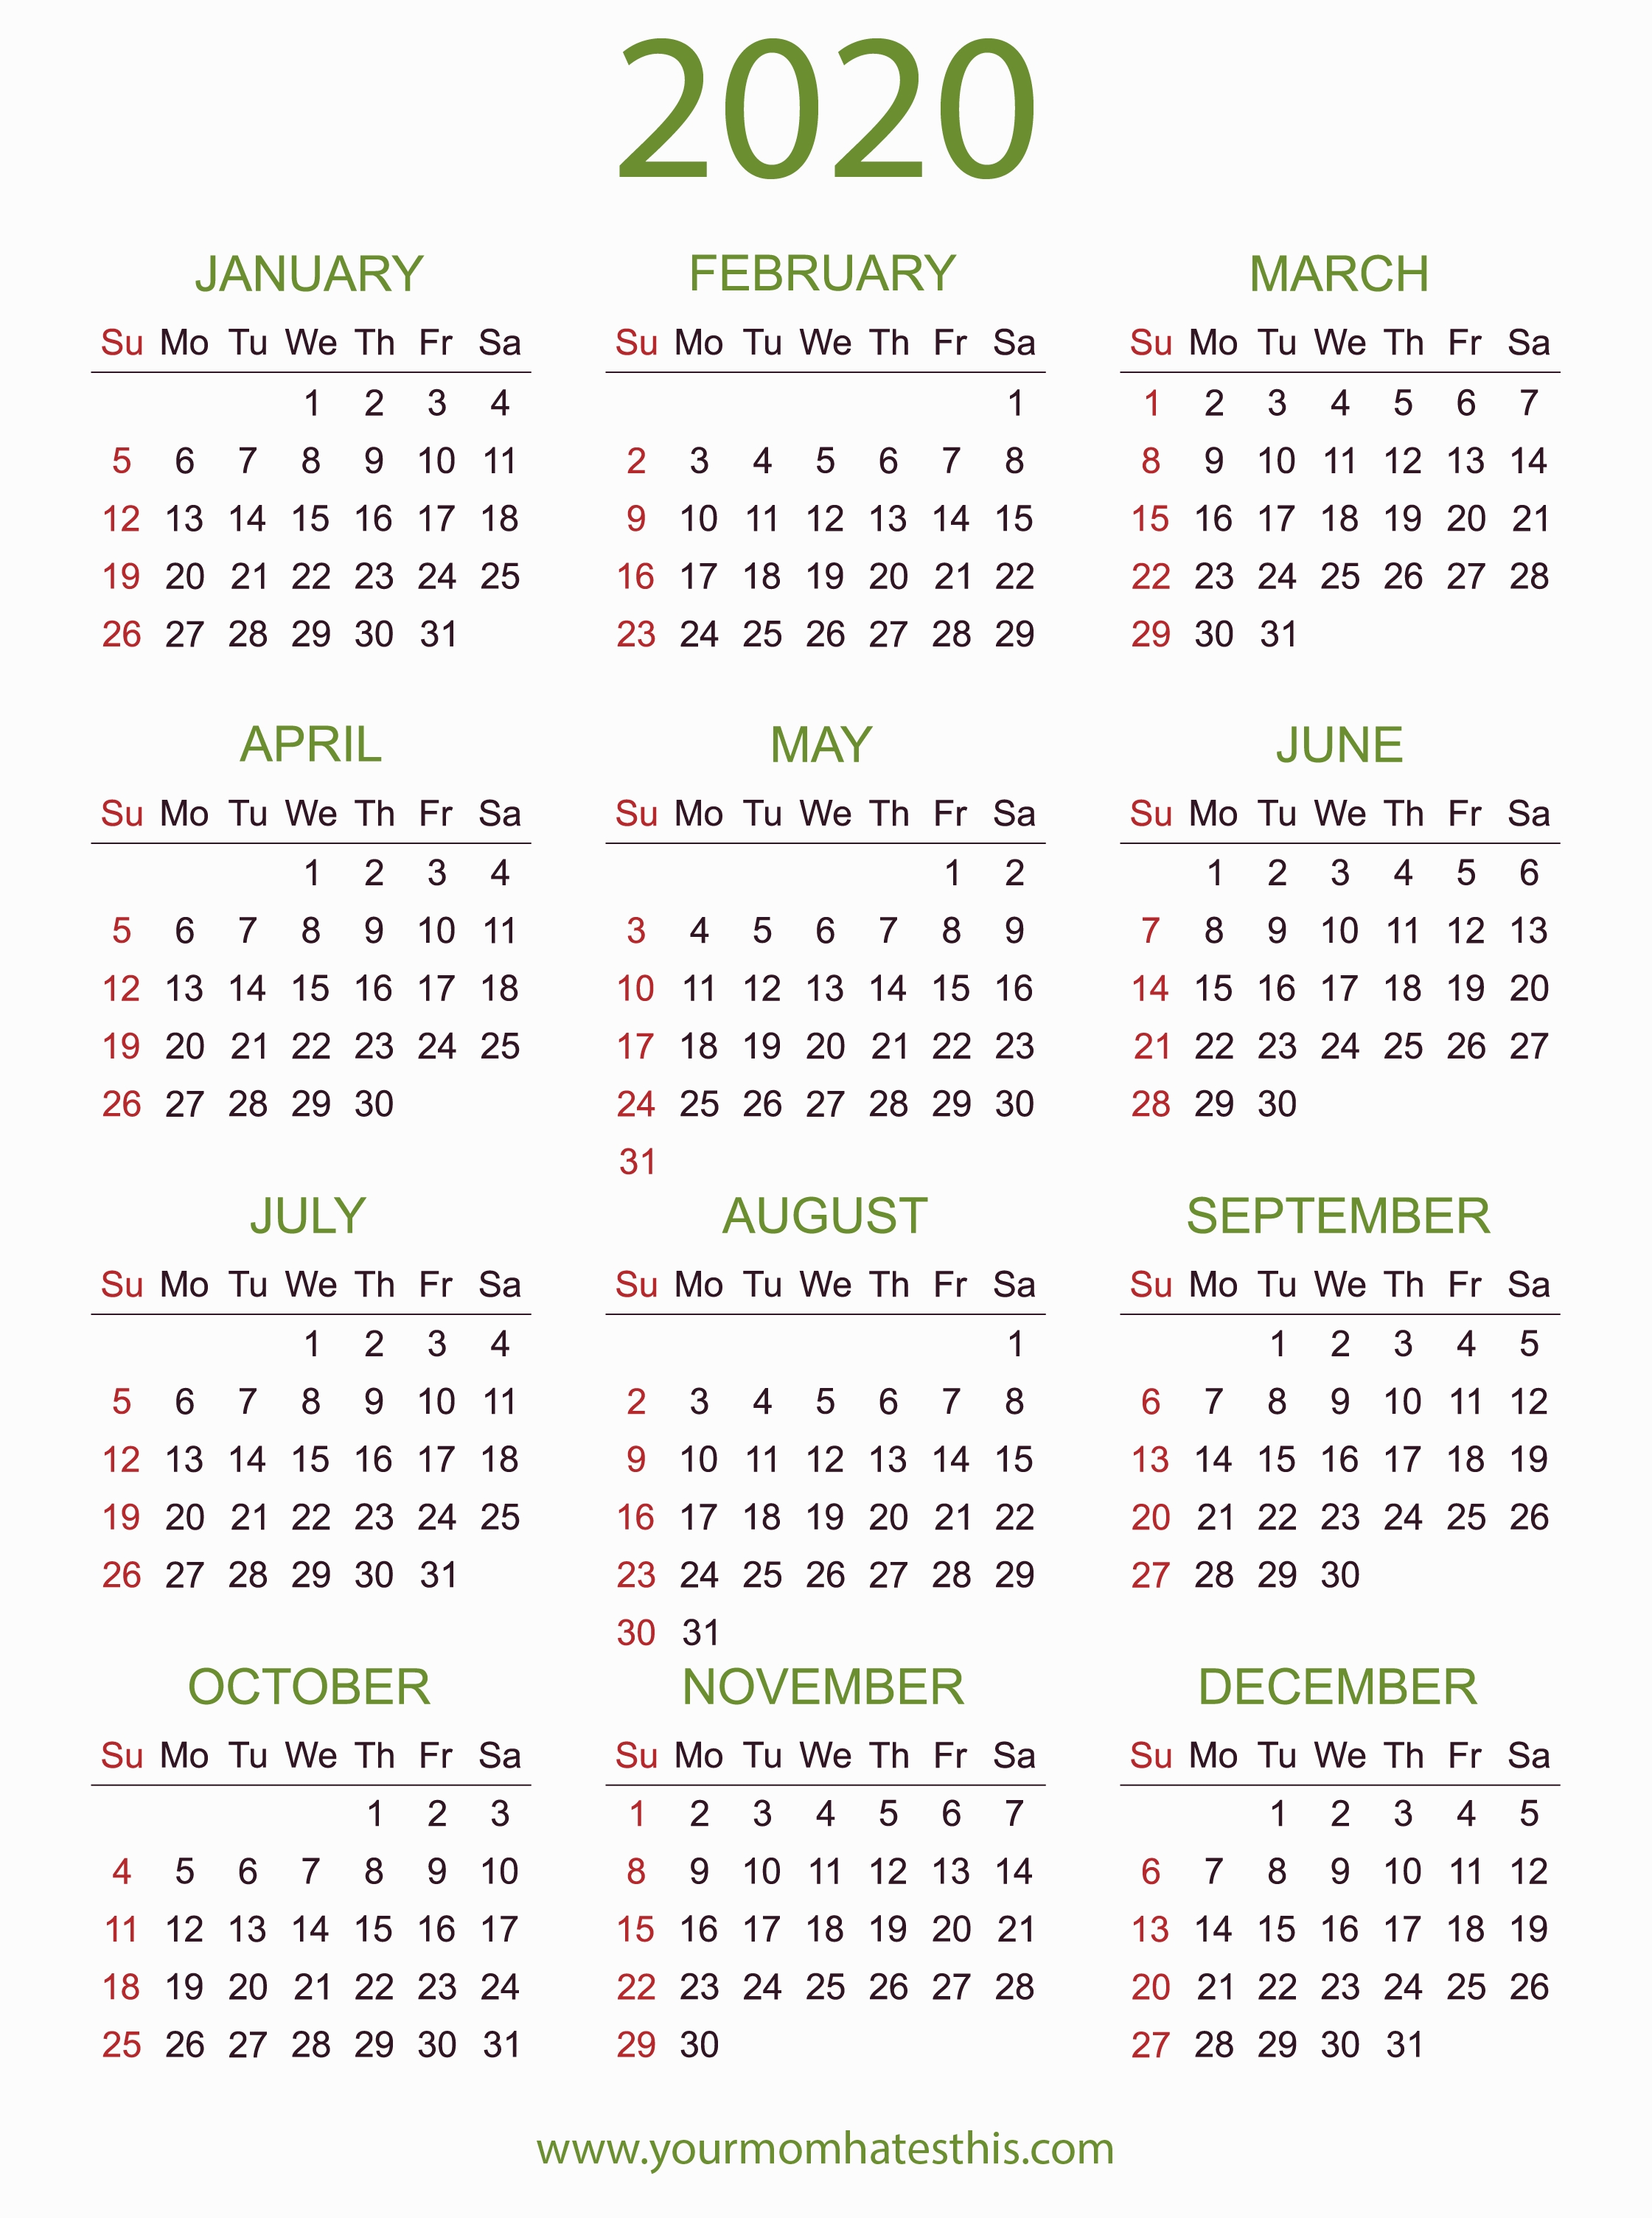 2020 Calendars In Pdf - Download Templates Of Calendar 2020